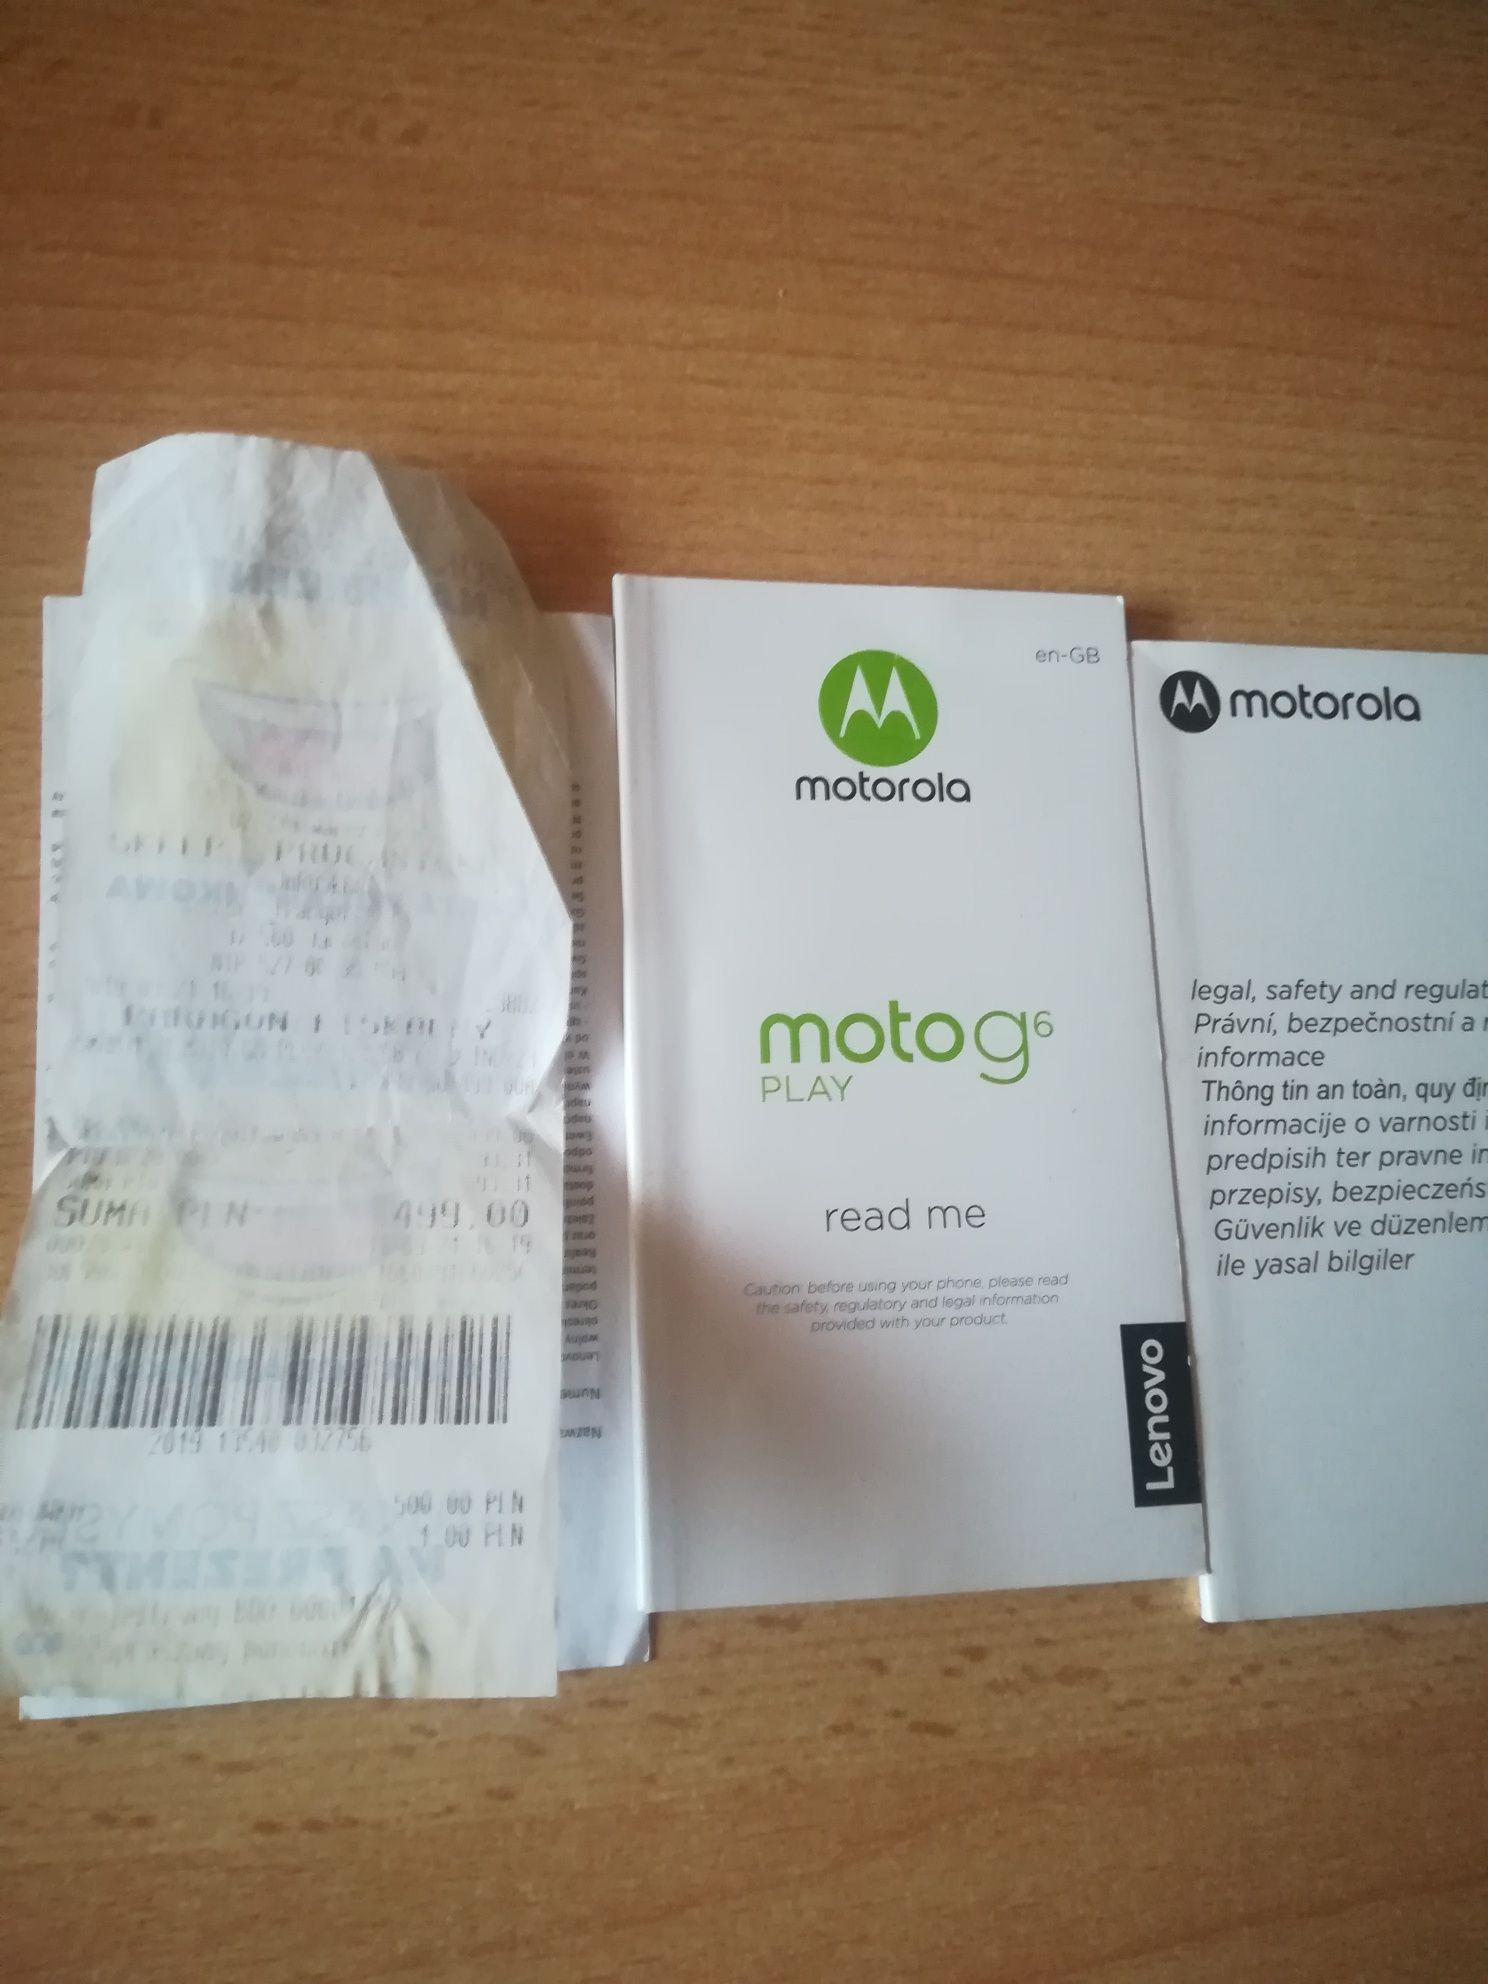 Motorola  moto g6 play